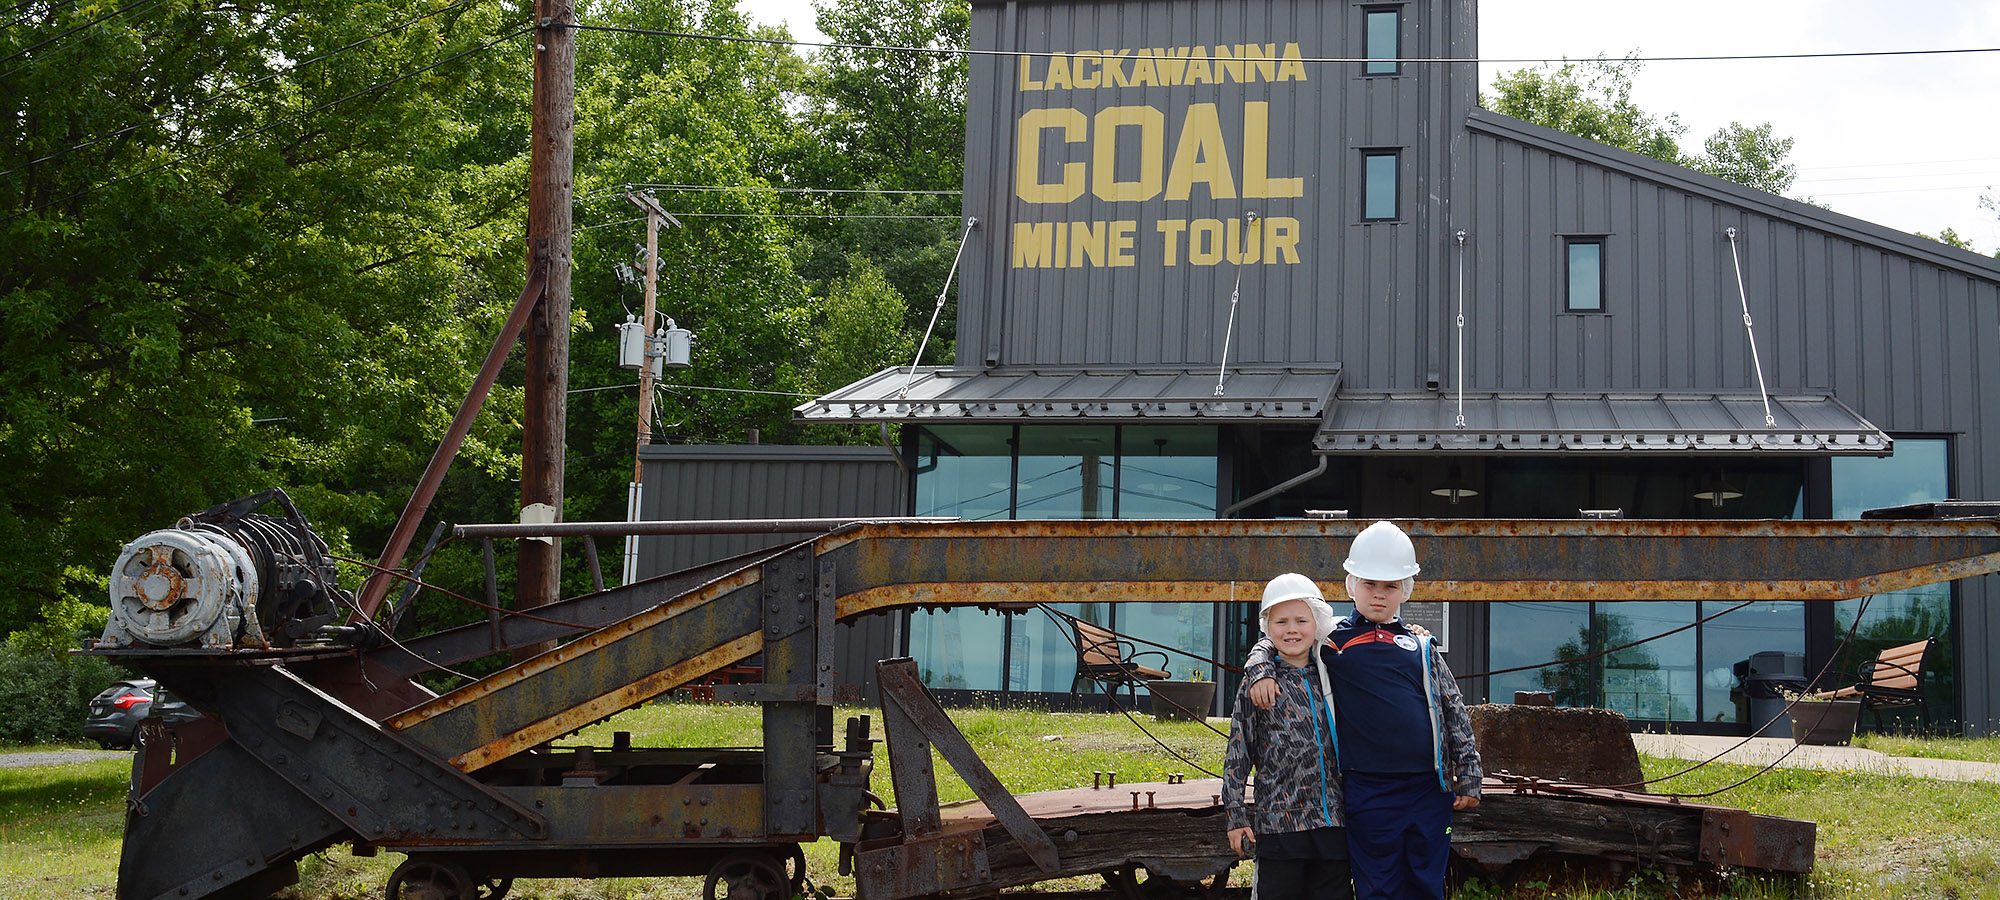 Lackawanna Coal Mine